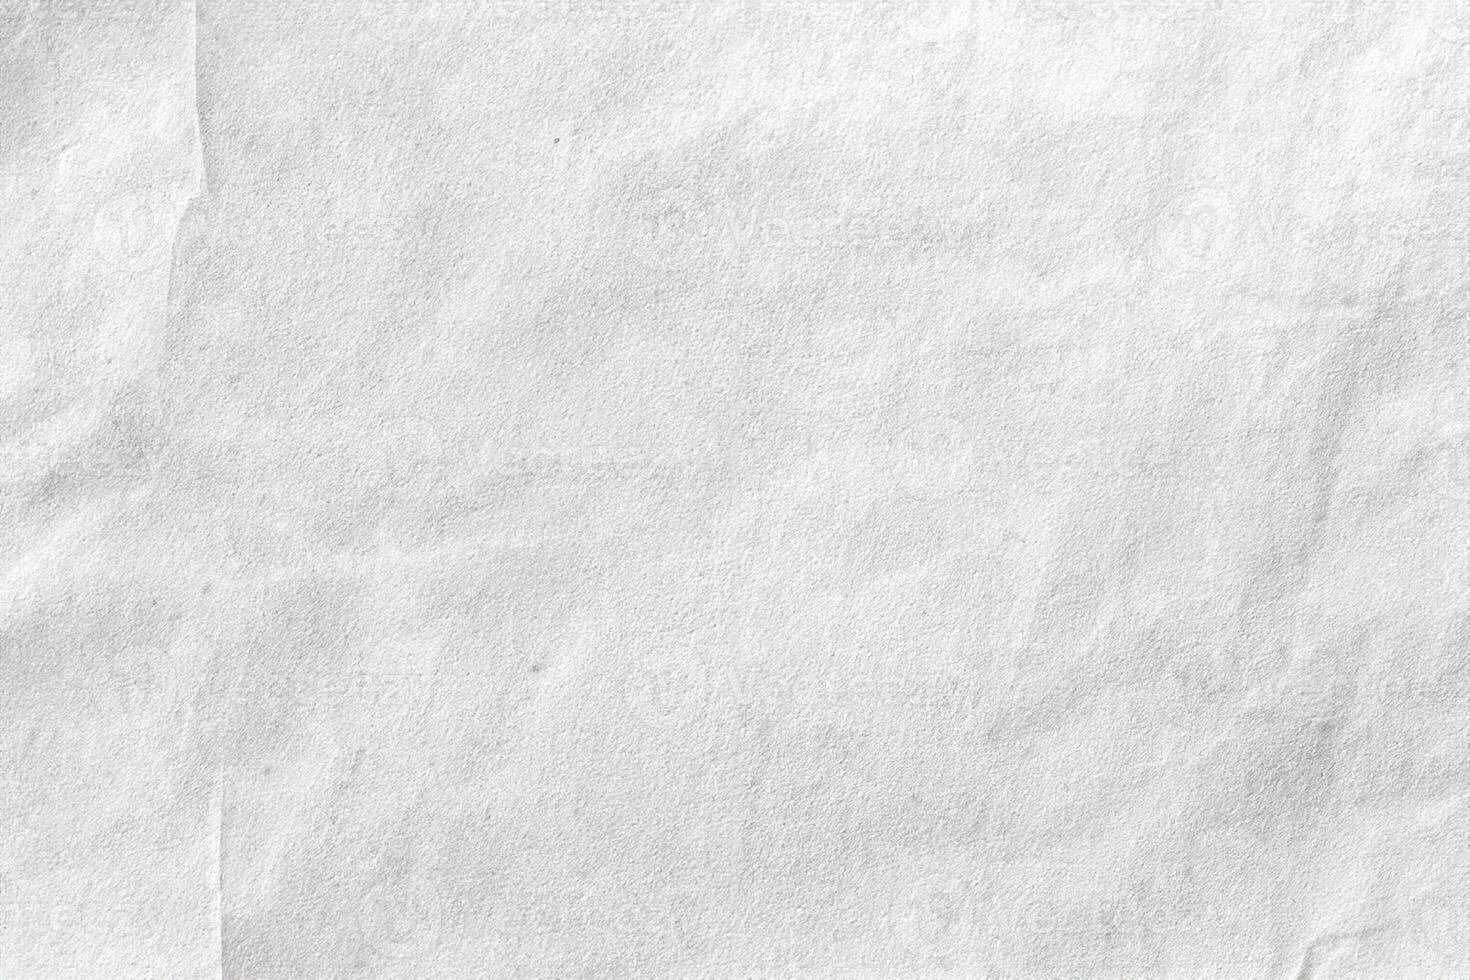 wit verfrommeld papier structuur achtergrond. detailopname. foto